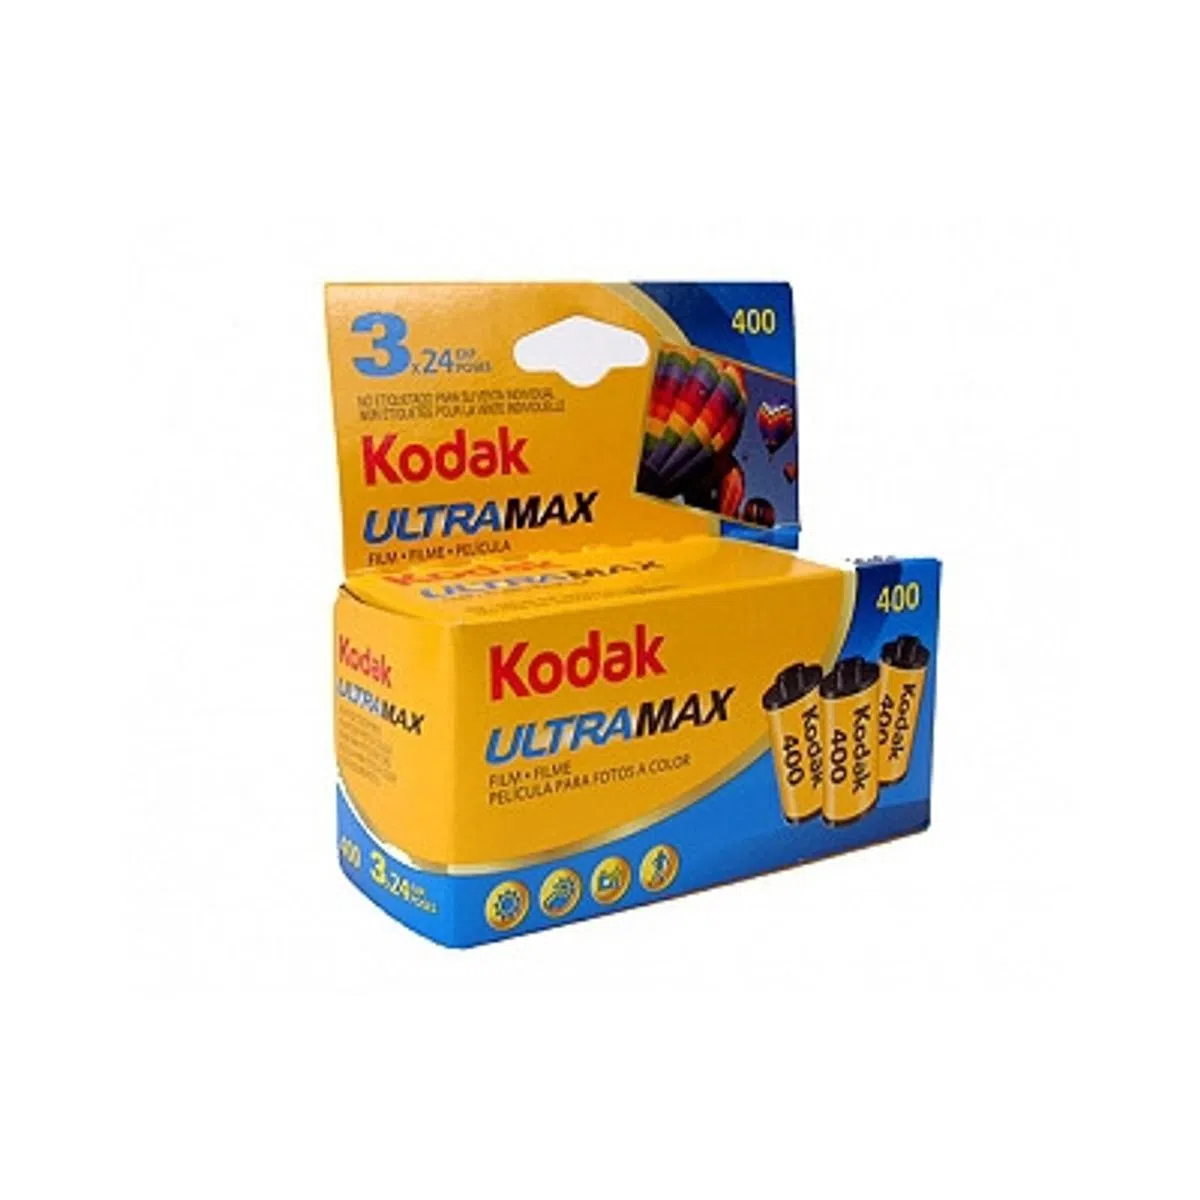 Kodak Ultra Max 400 - film negativ color ingust, pachet de 3 buc (ISO 400, 135-24) [1]